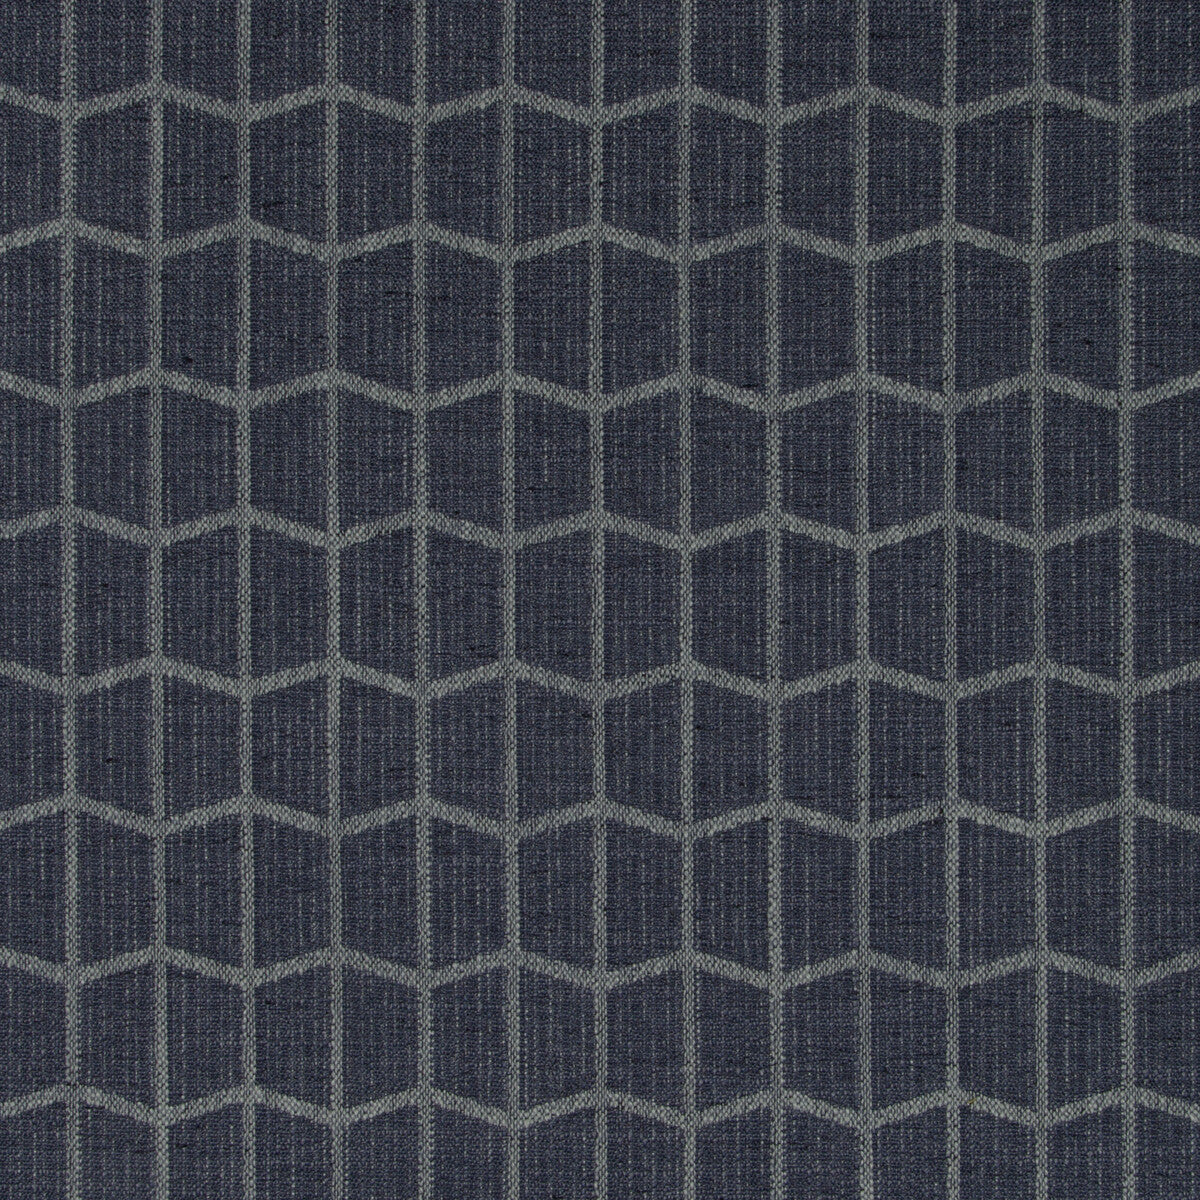 Kravet Smart fabric in 35332-521 color - pattern 35332.521.0 - by Kravet Smart in the Performance Kravetarmor collection